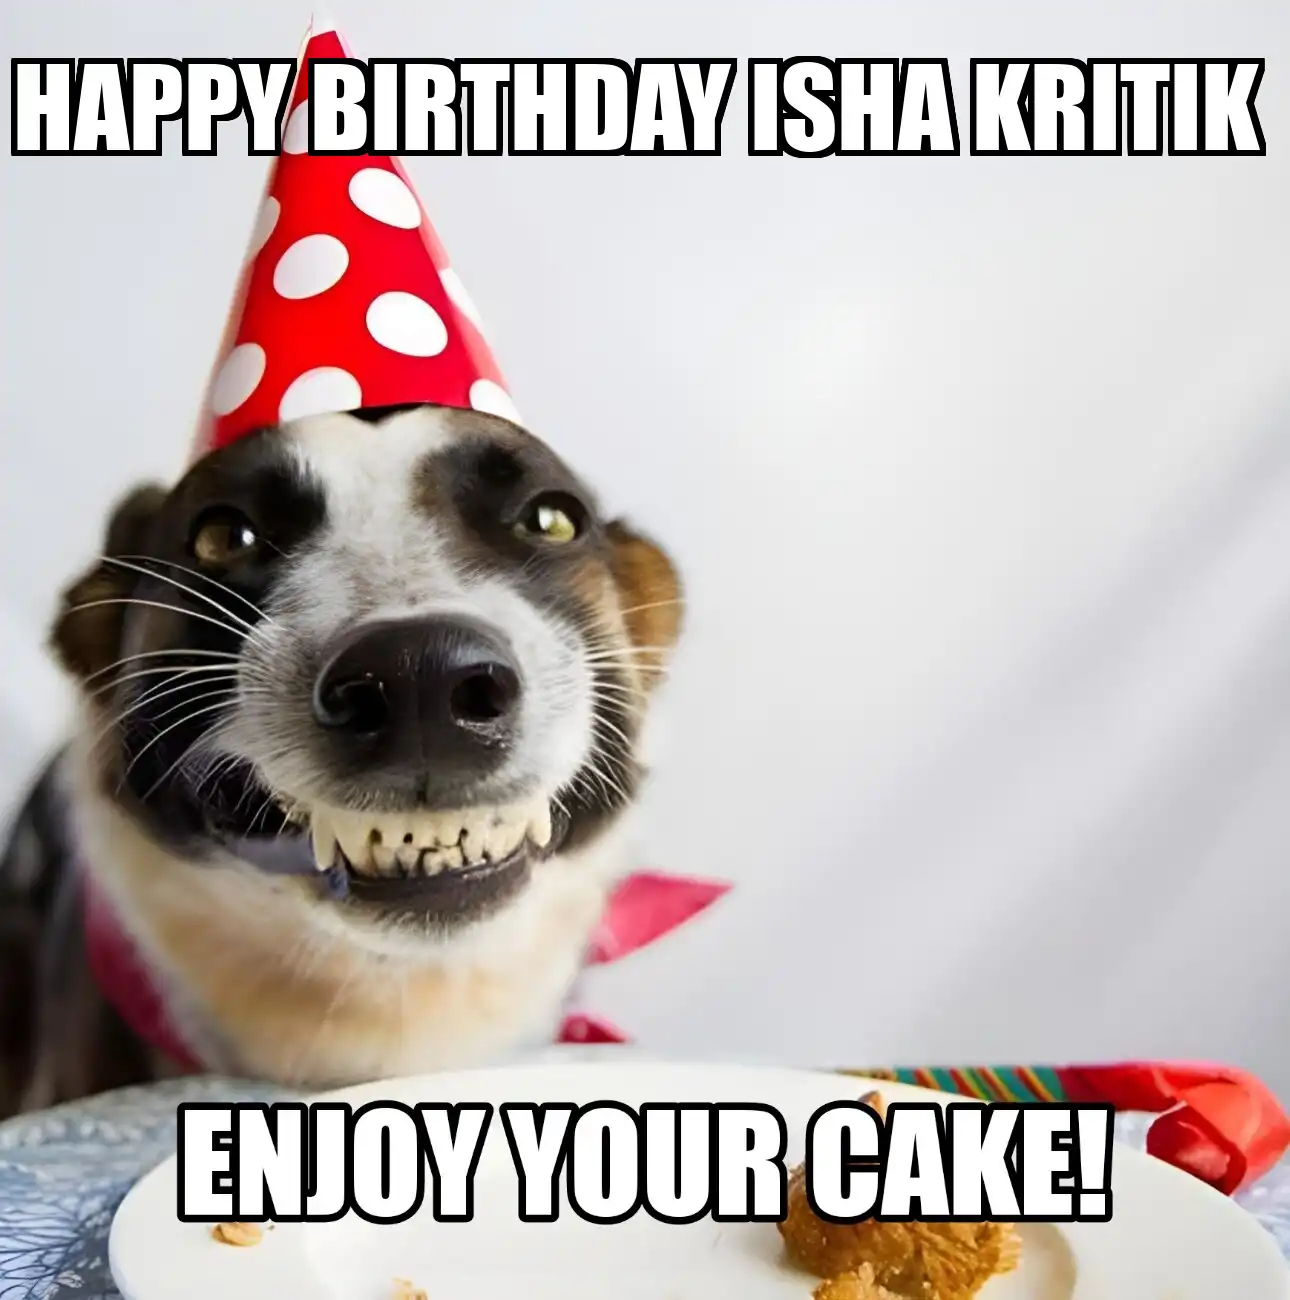 Happy Birthday Isha Kritik Enjoy Your Cake Dog Meme